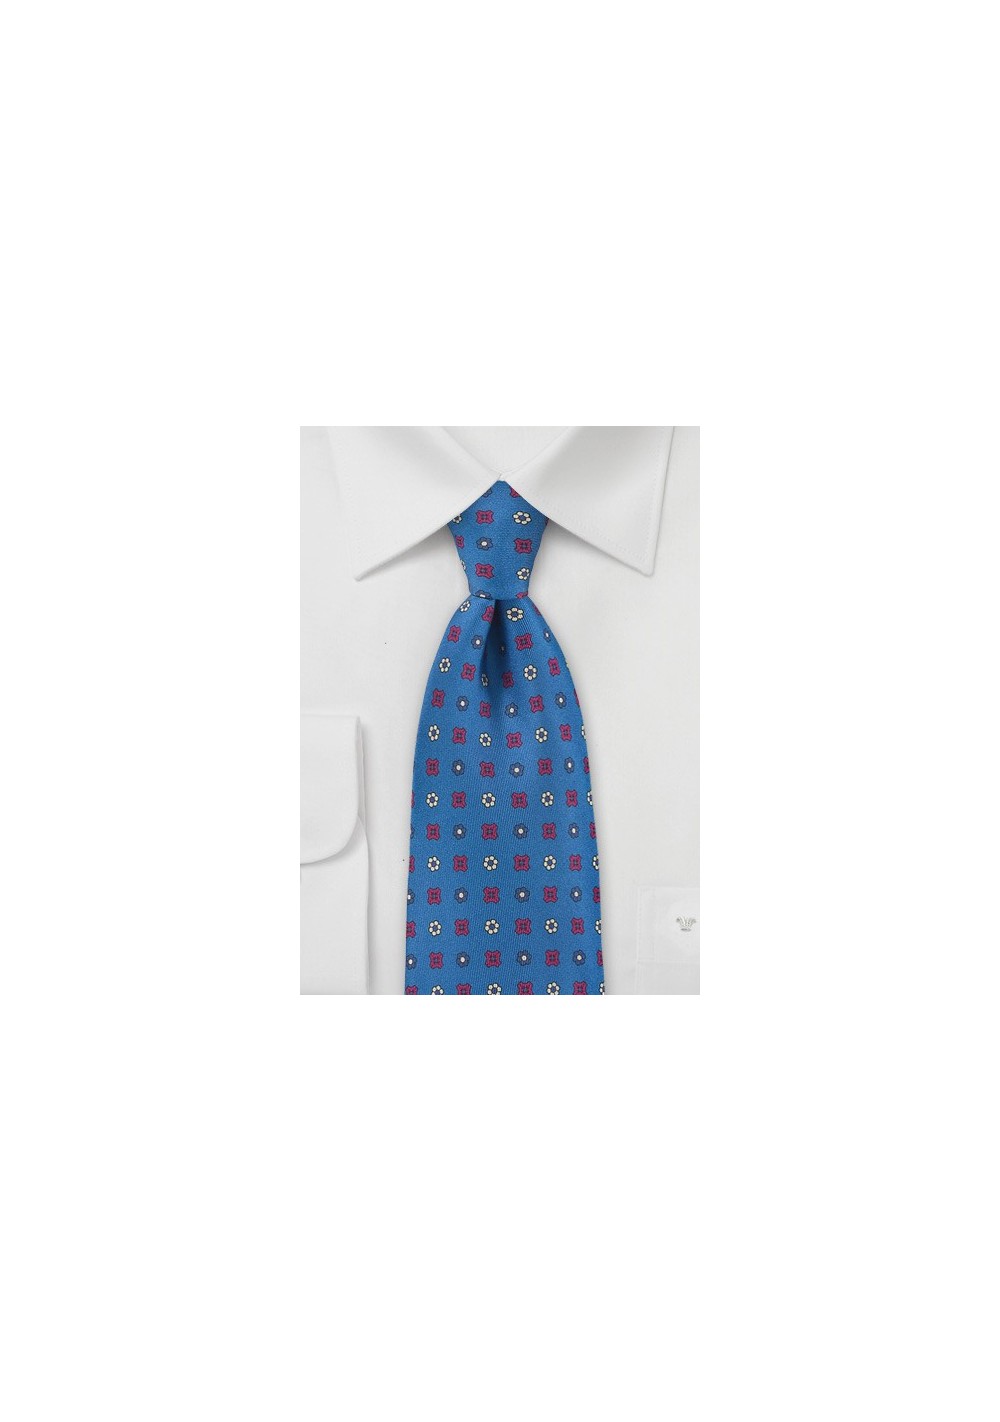 Emblem Patterned Tie in Marine Blue